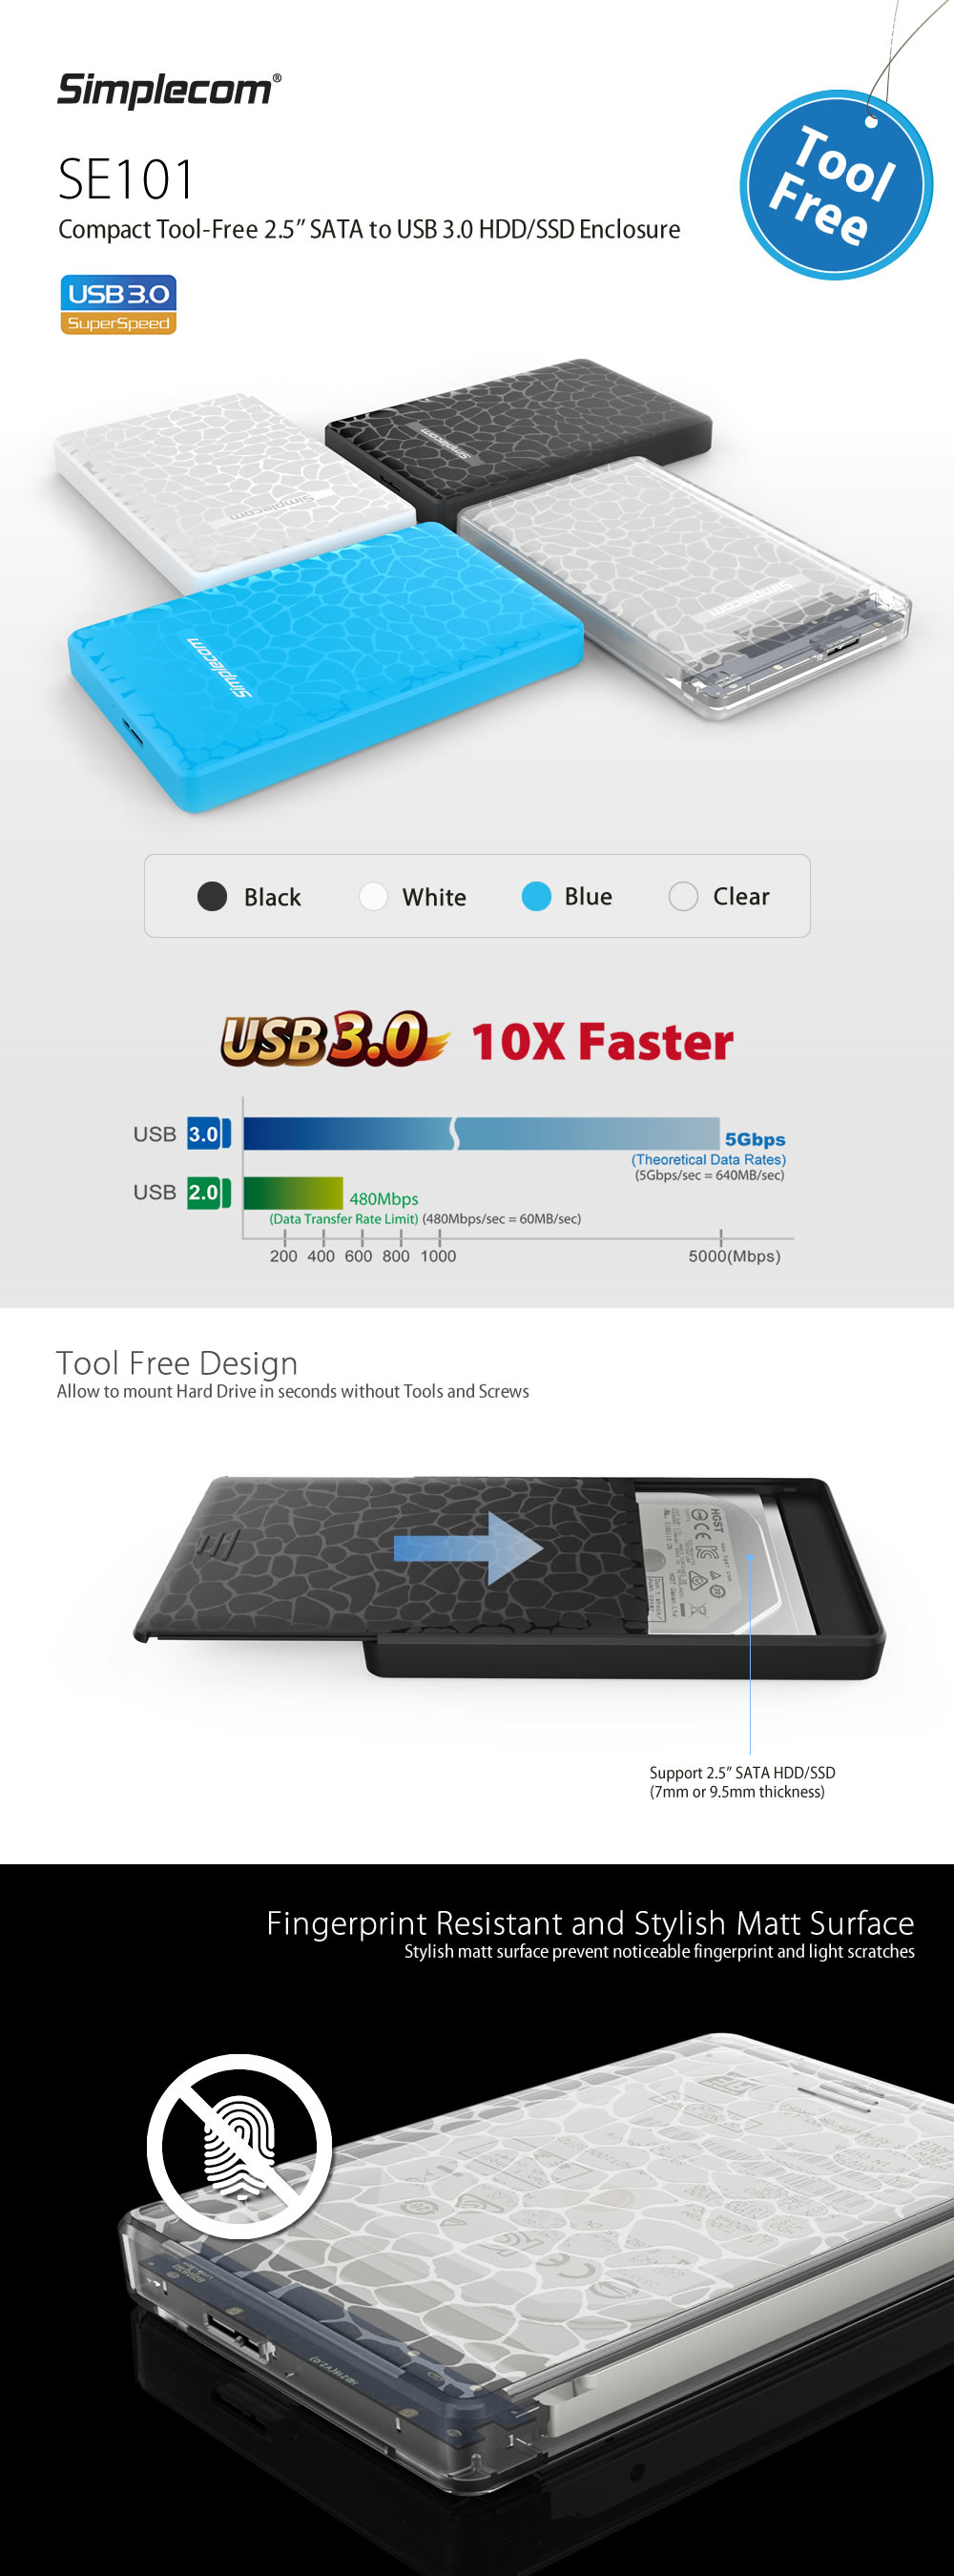 Simplecom SE101 Compact Tool-Free 2.5'' SATA to USB 3.0 HDD/SSD Enclosure White 1